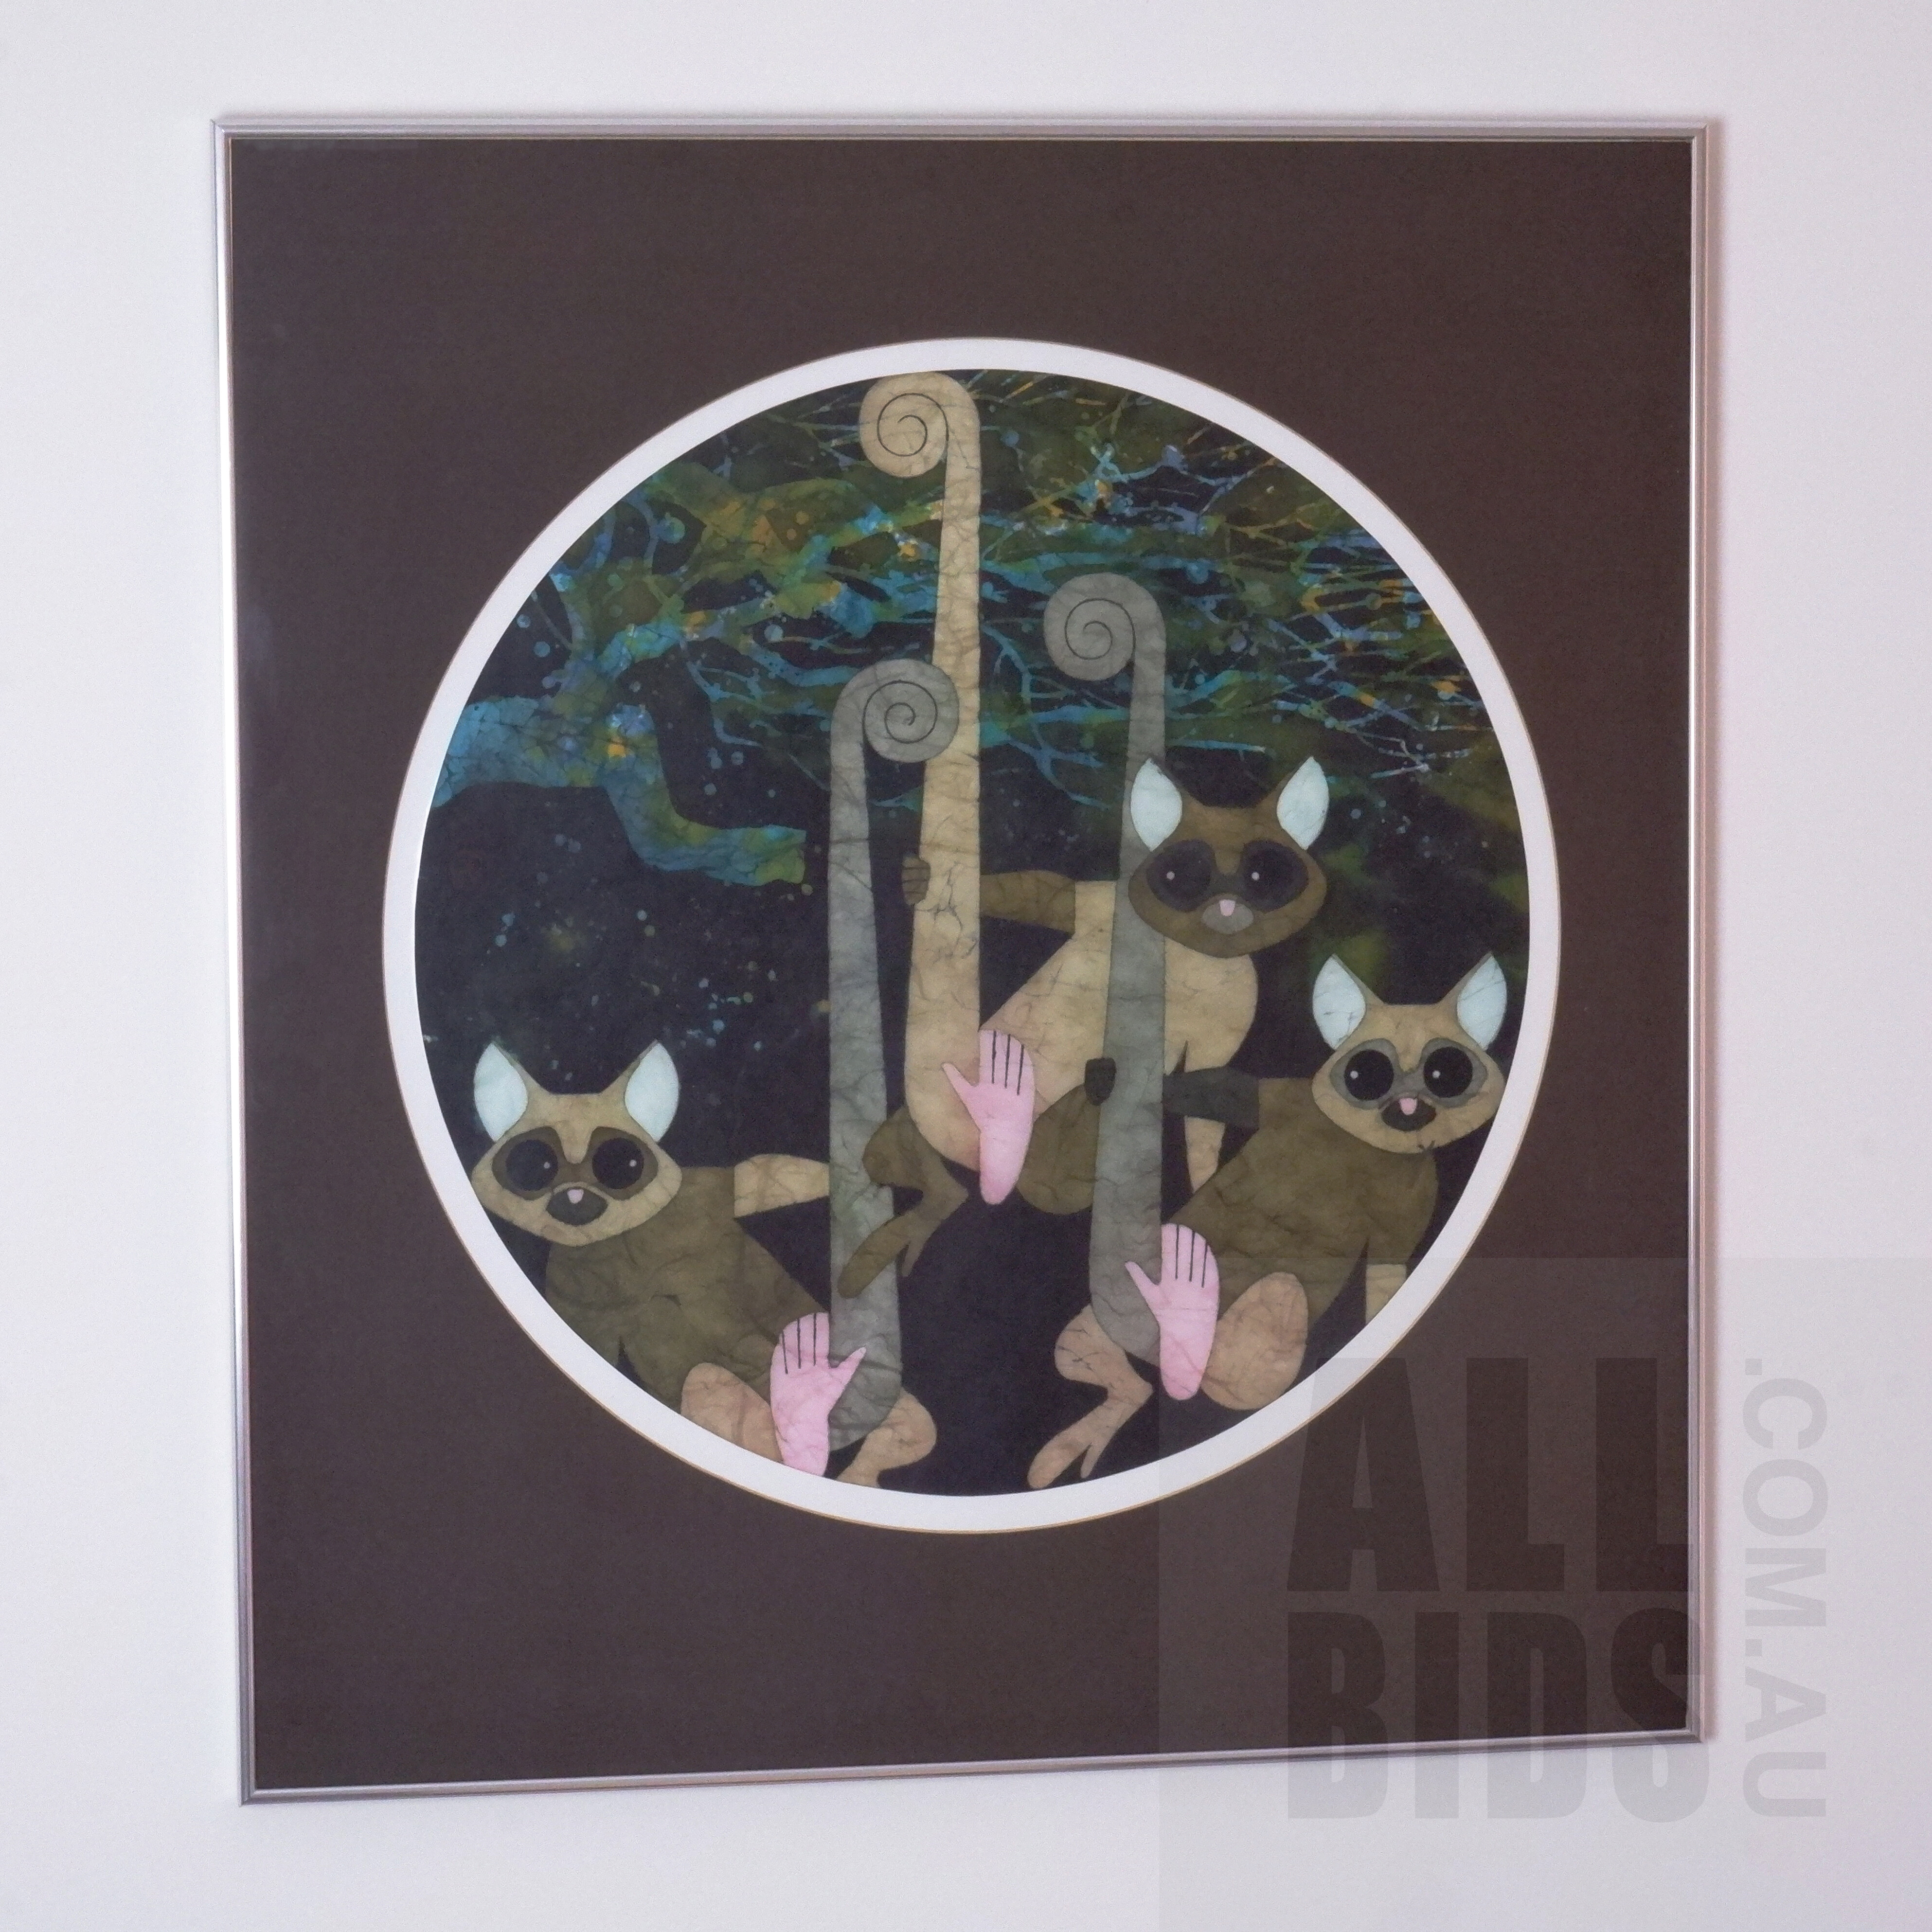 'Cornel Swen (born 1930), Possums, Wax-Resist Dye on Japanese Washi Paper, Diameter: 49 cm'